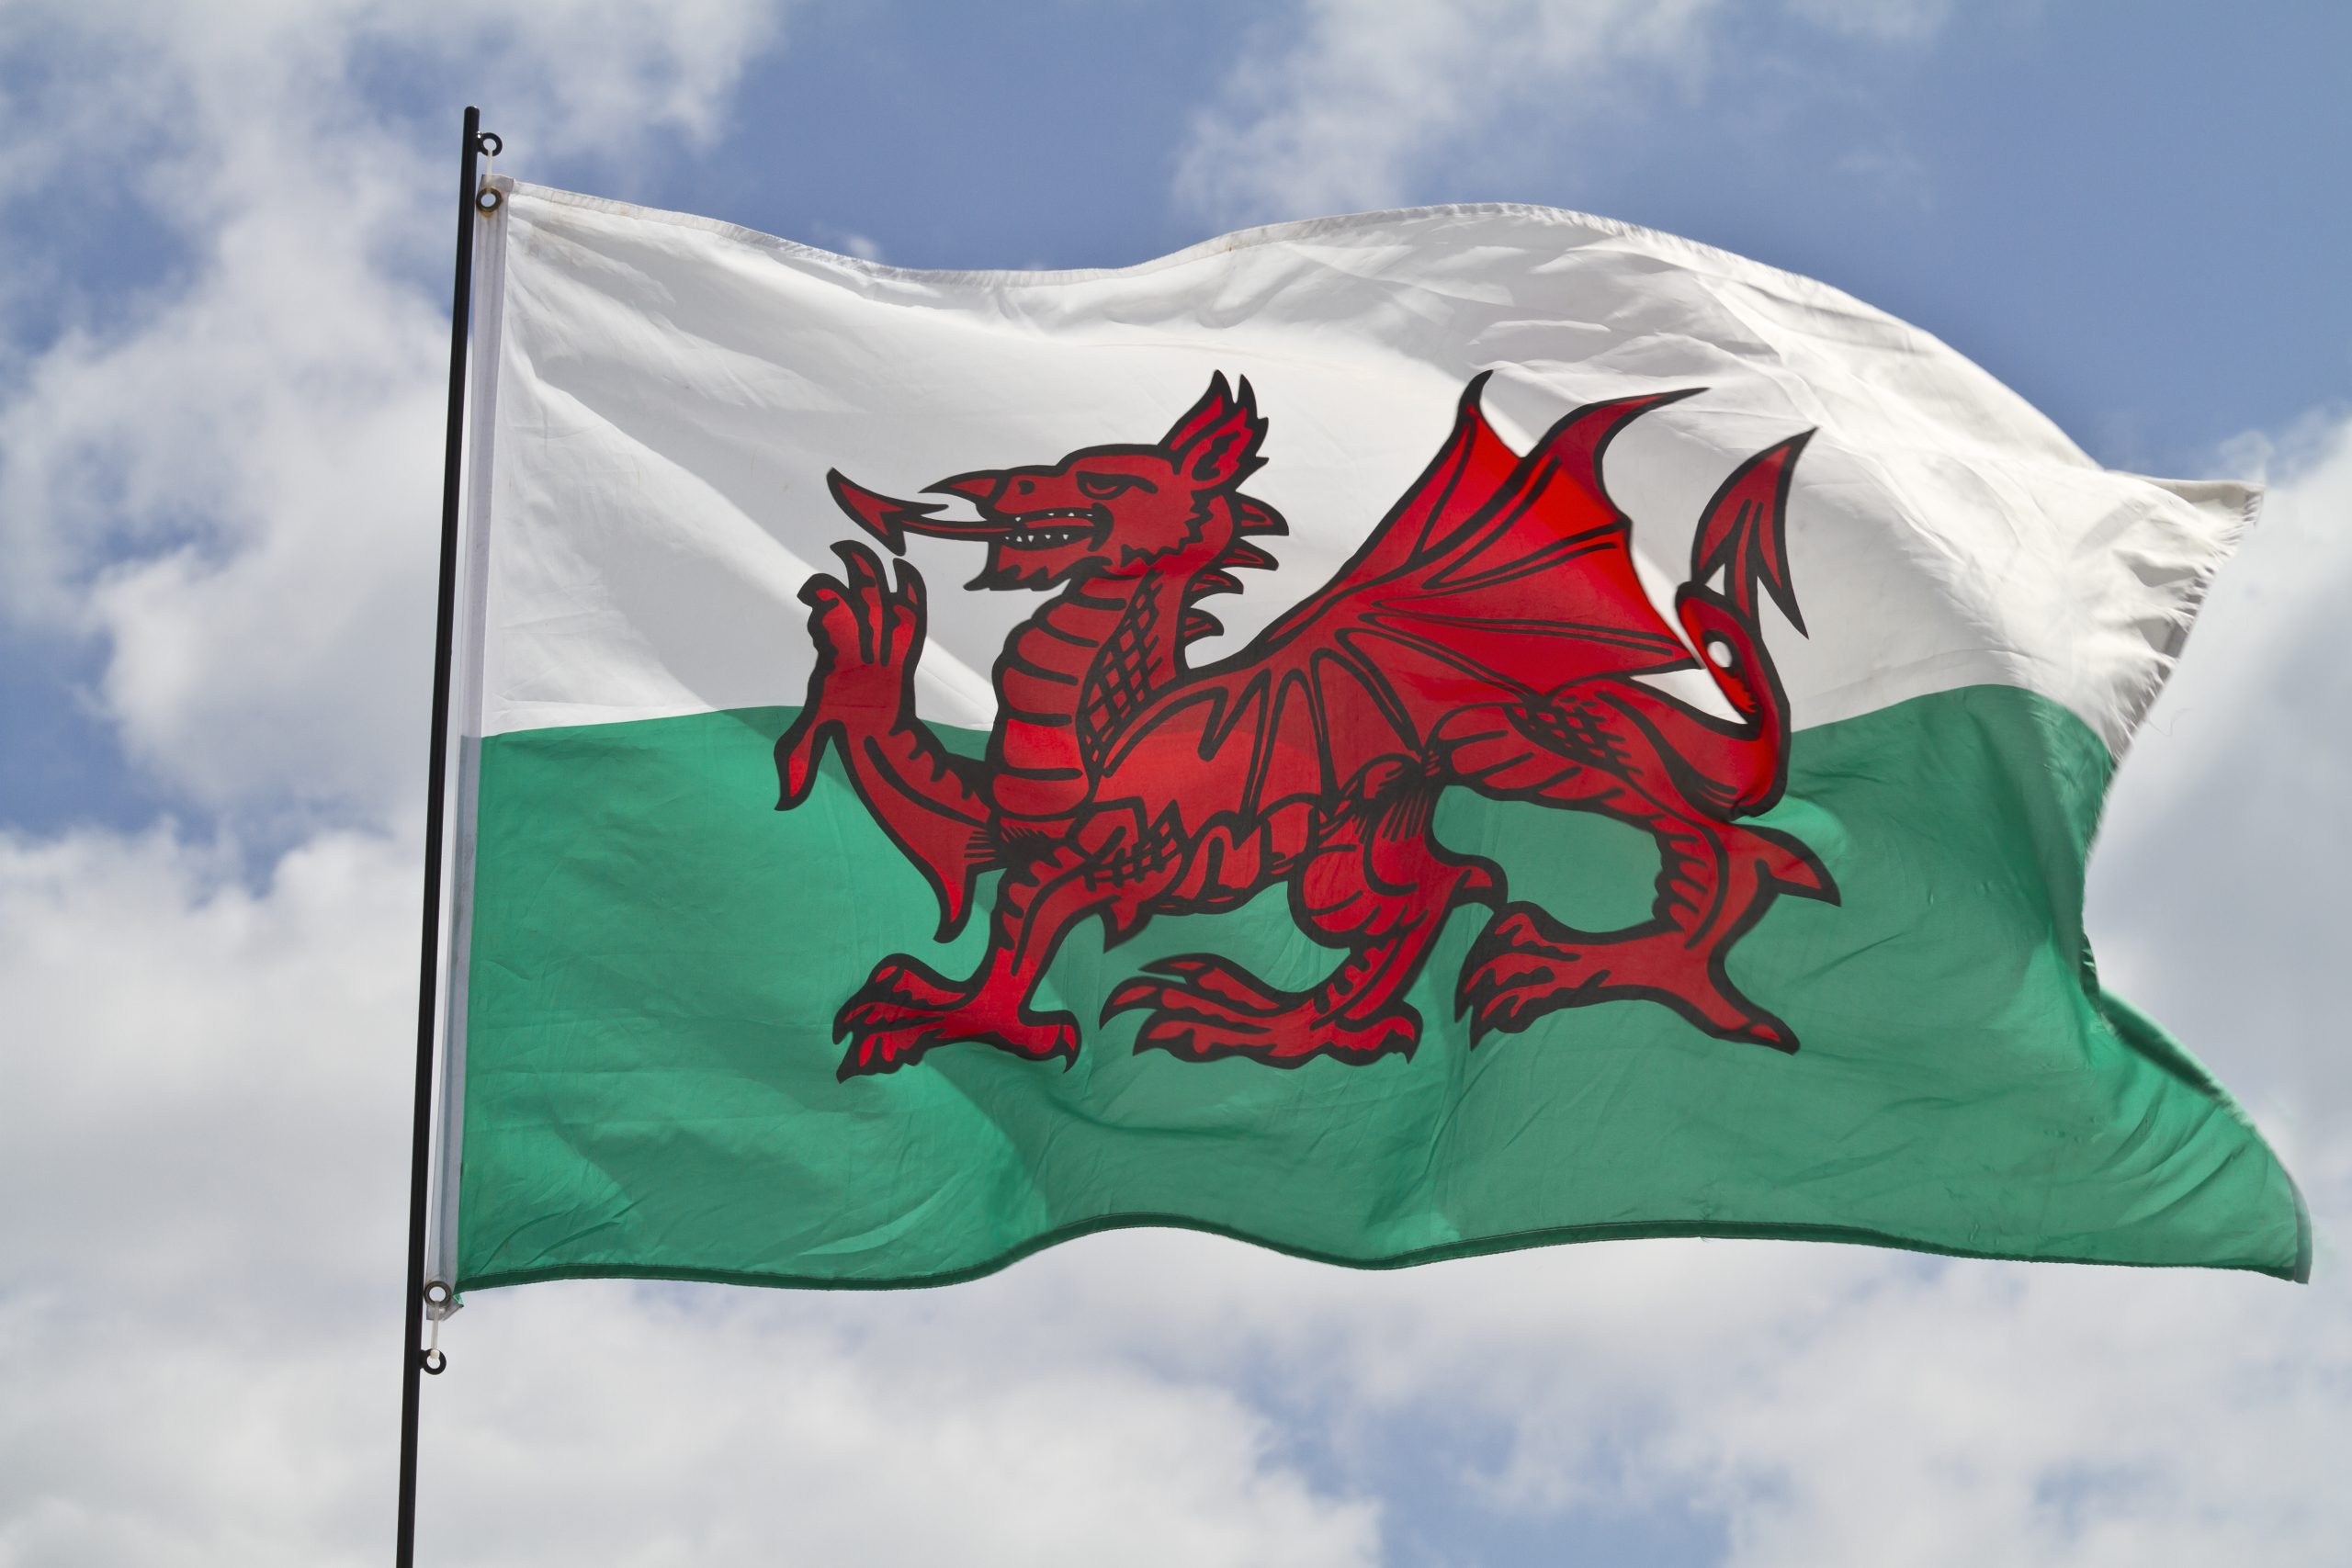 Welsh. Флаг Уэльса. Флаг Вейлс дракон. Дракон на флаге Уэльса. Валлийский дракон флаг Уэльса.